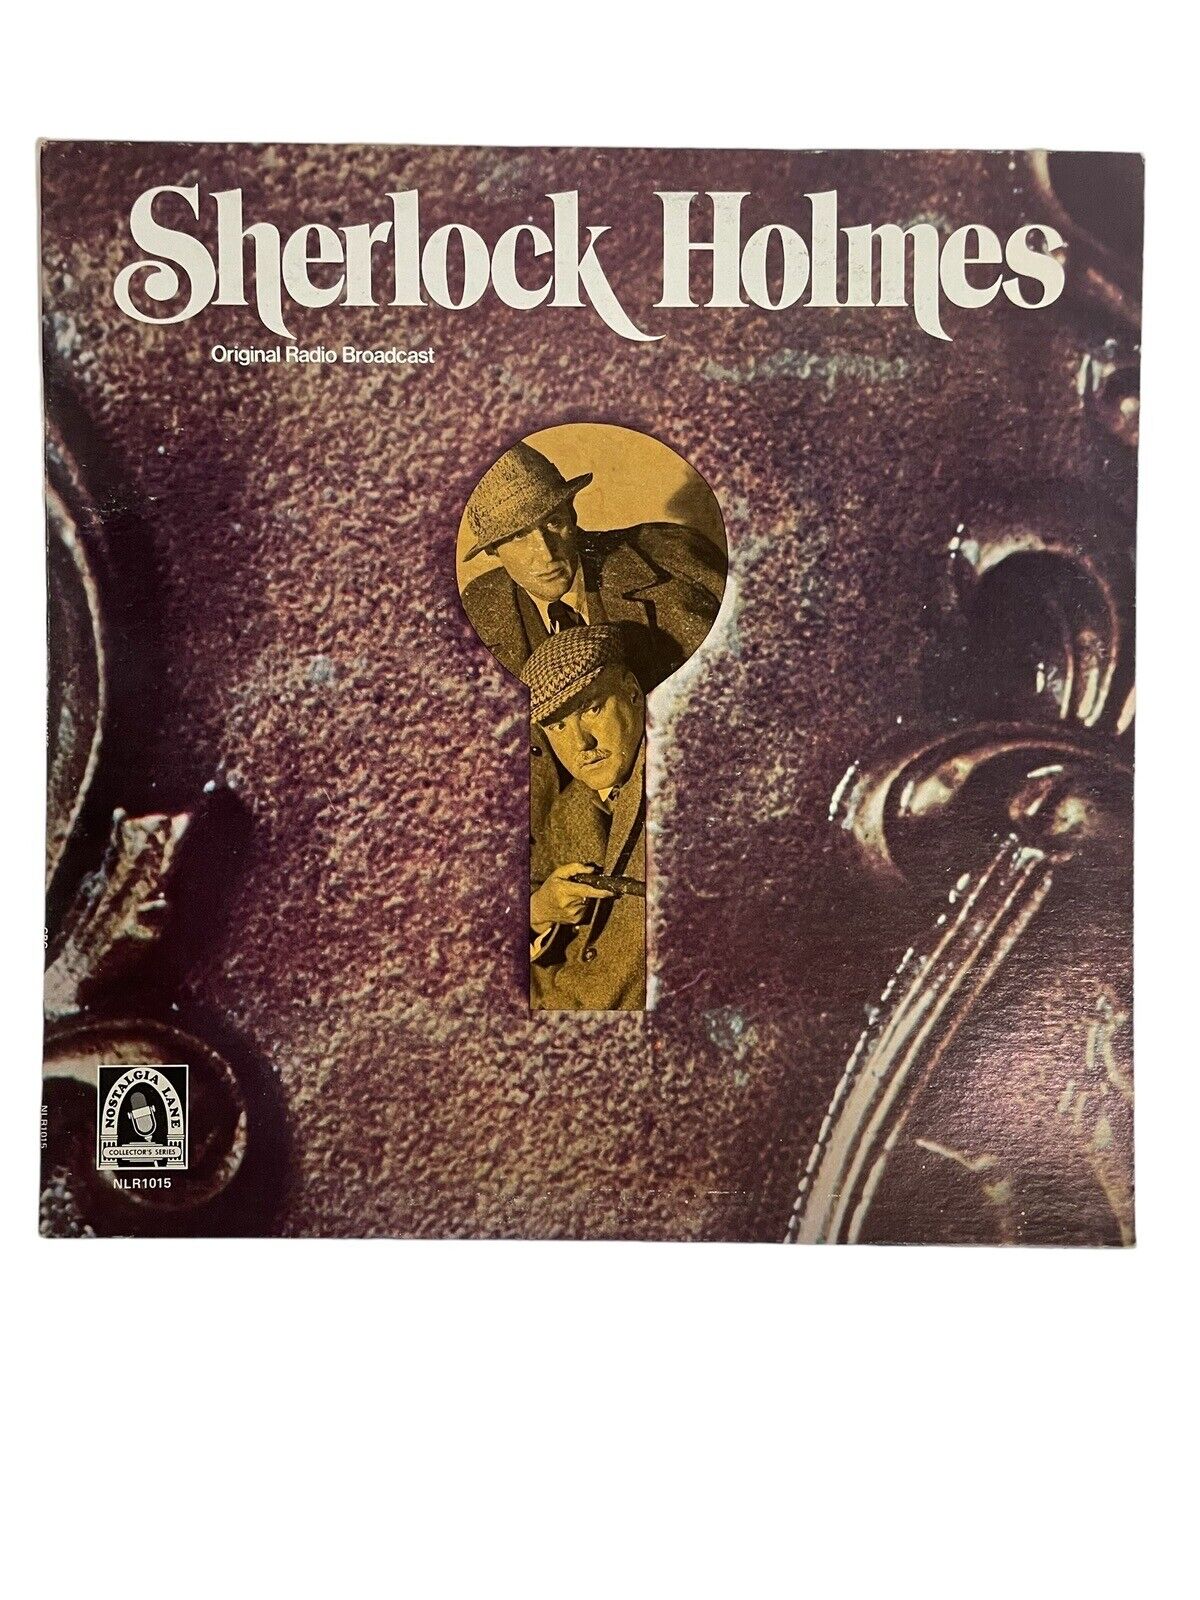 Vintage 1977 Sherlock Holmes Original Radio Broadcast Vinyl Record